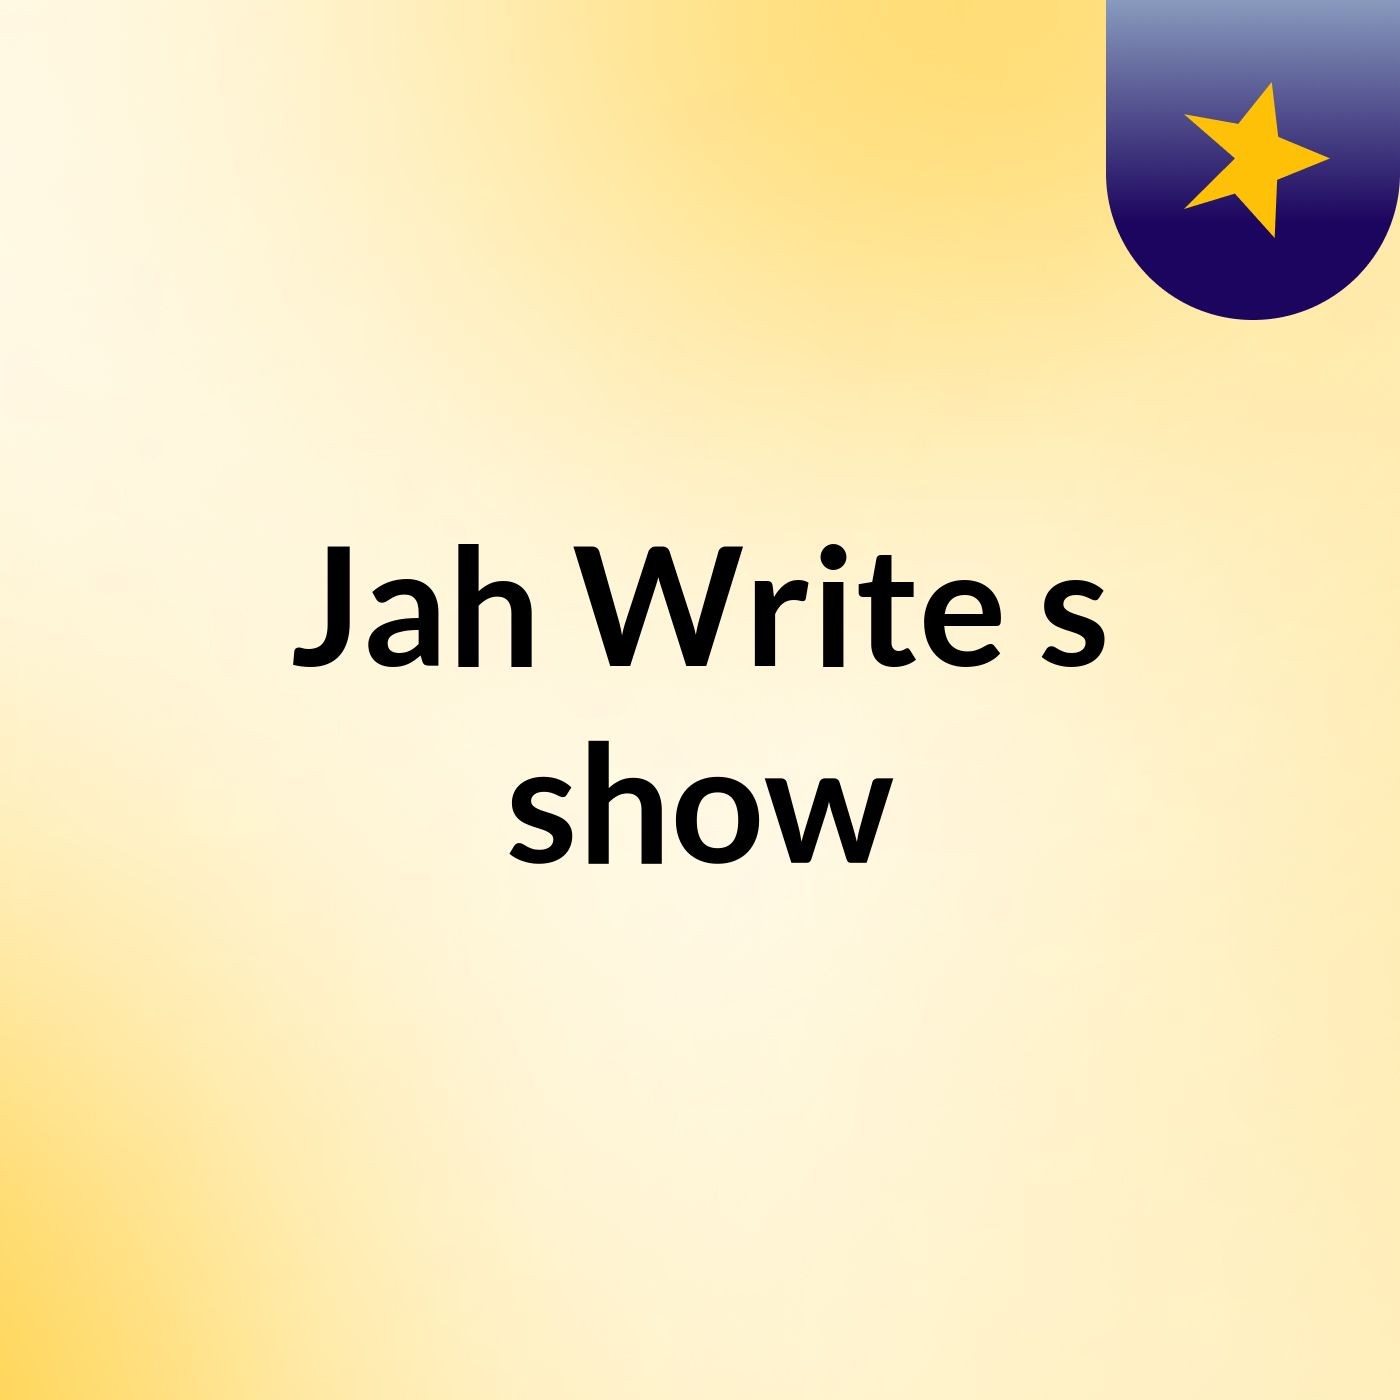 Episode 2 - Jah Write's show